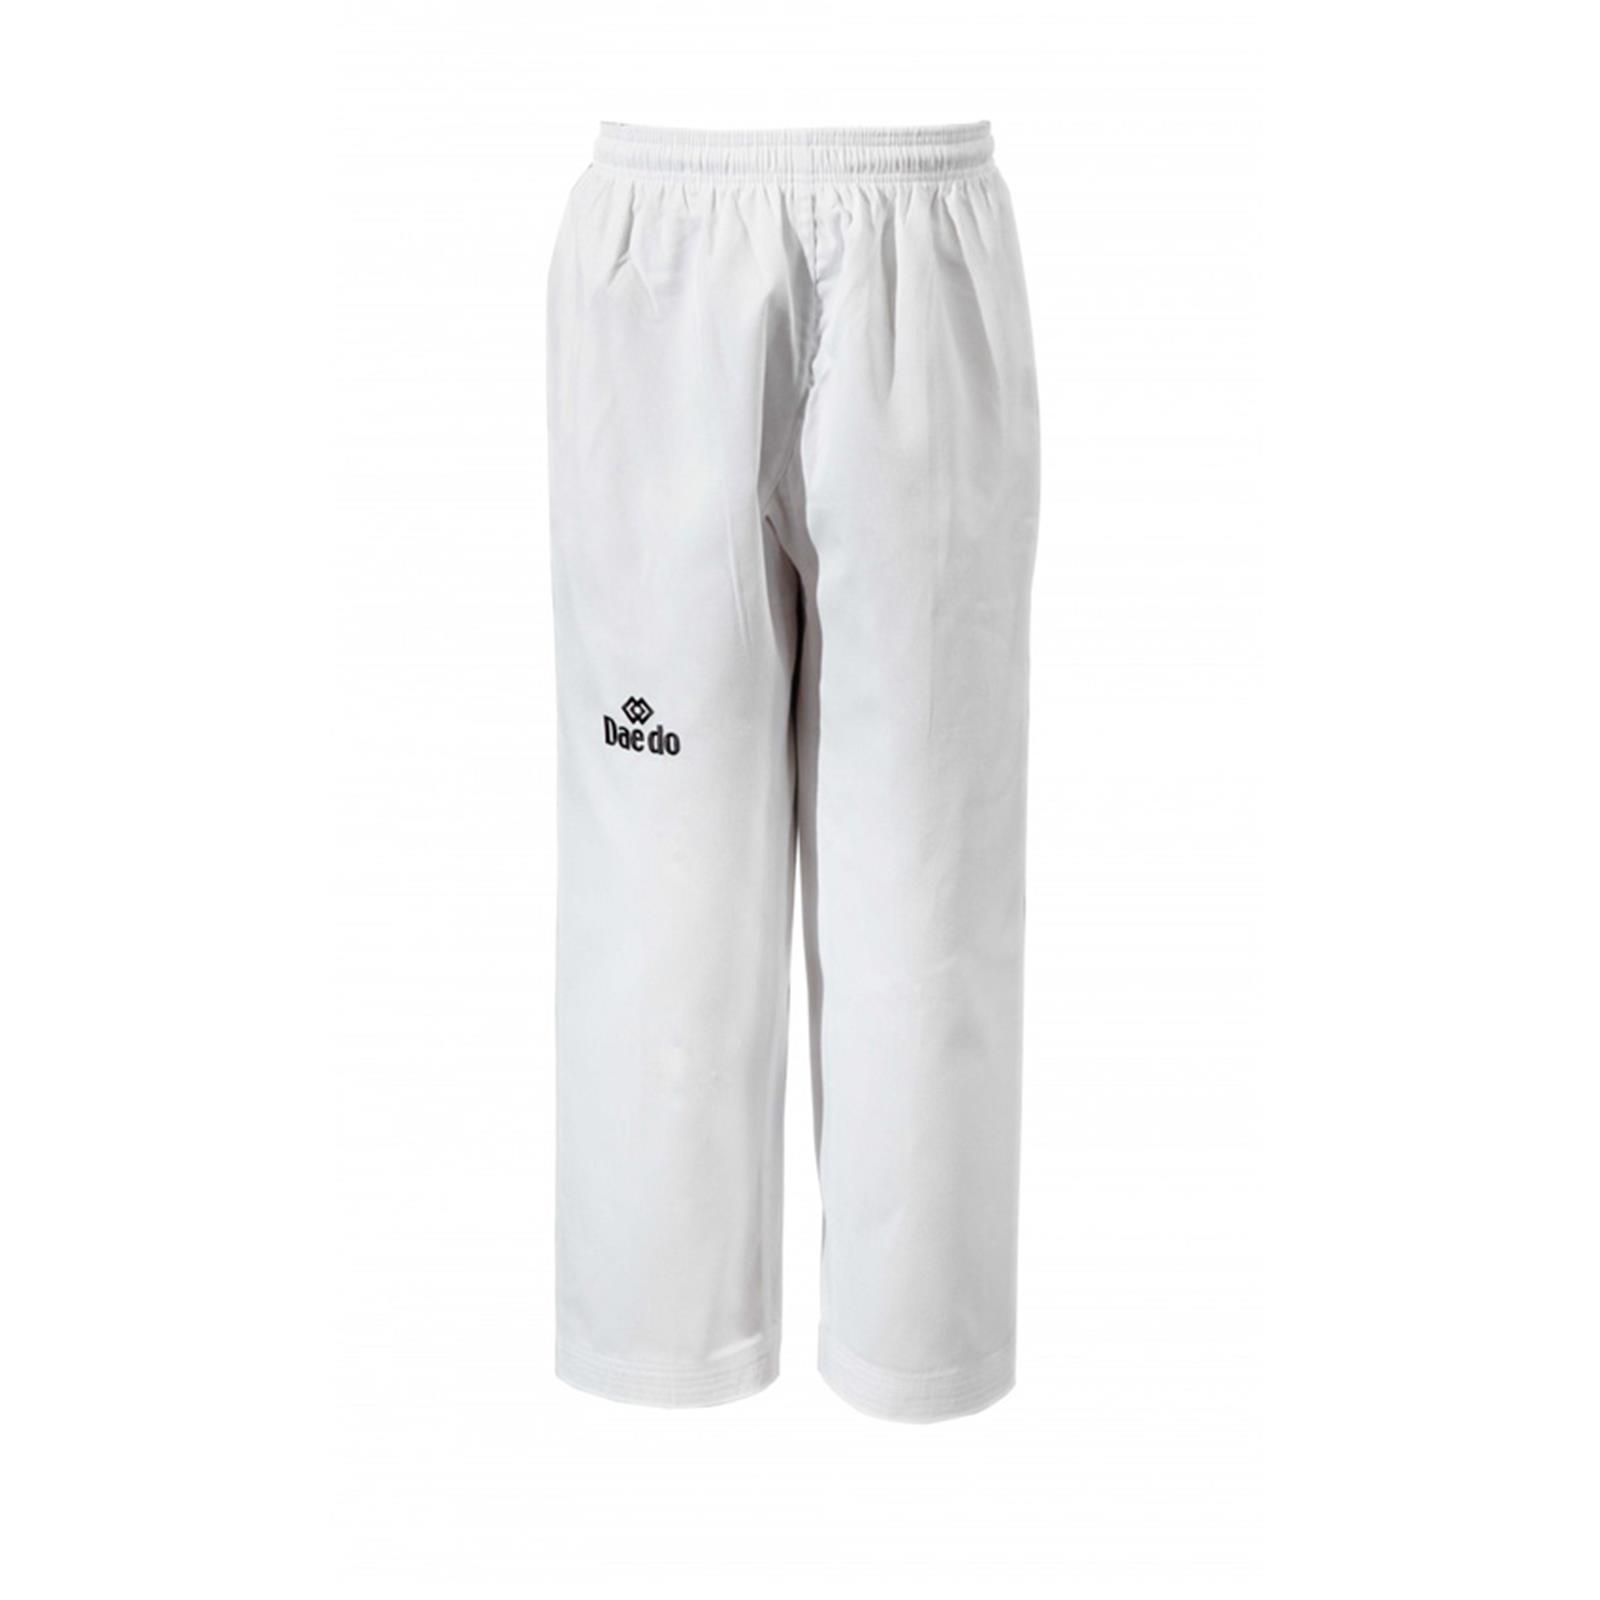 Dae Do Pantalone per Dobok Bianco (7° - 200cm - BIANCO)